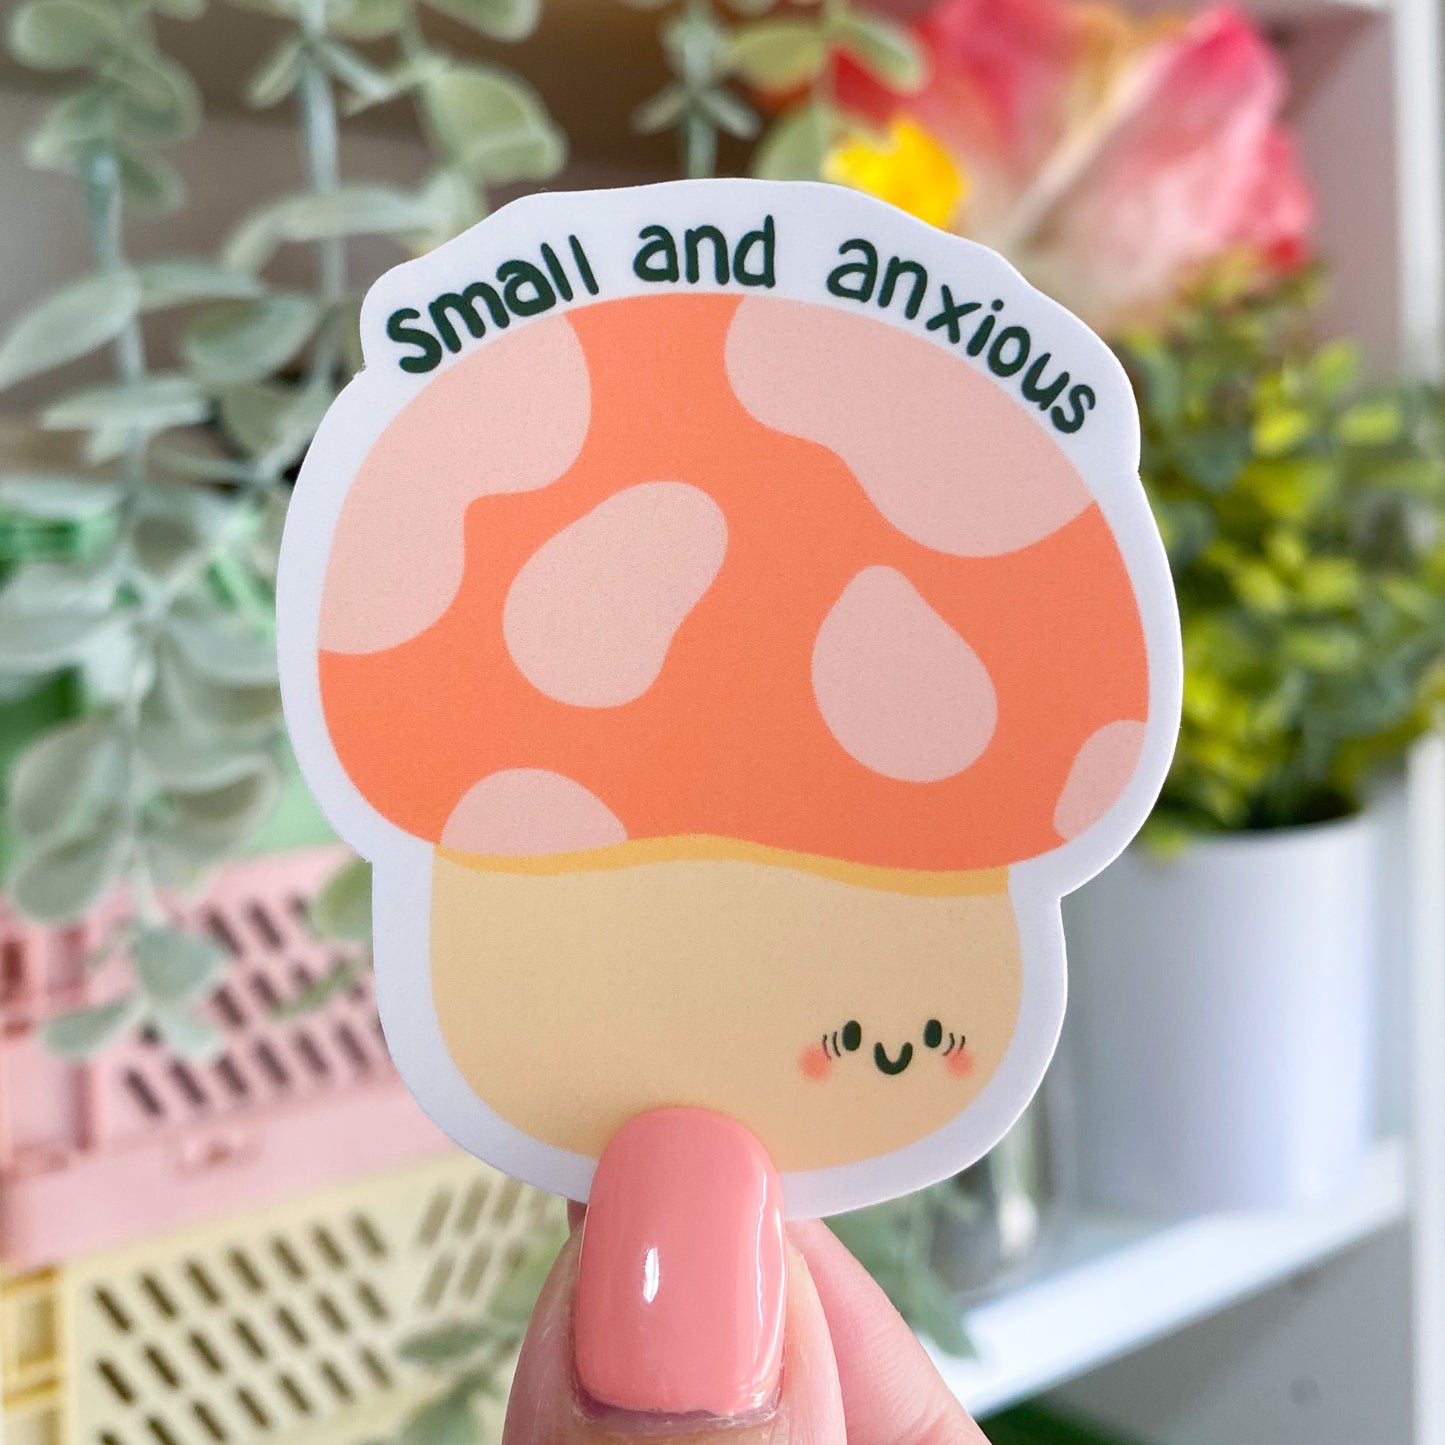 mushroom ORANGE "small and anxious" sticker